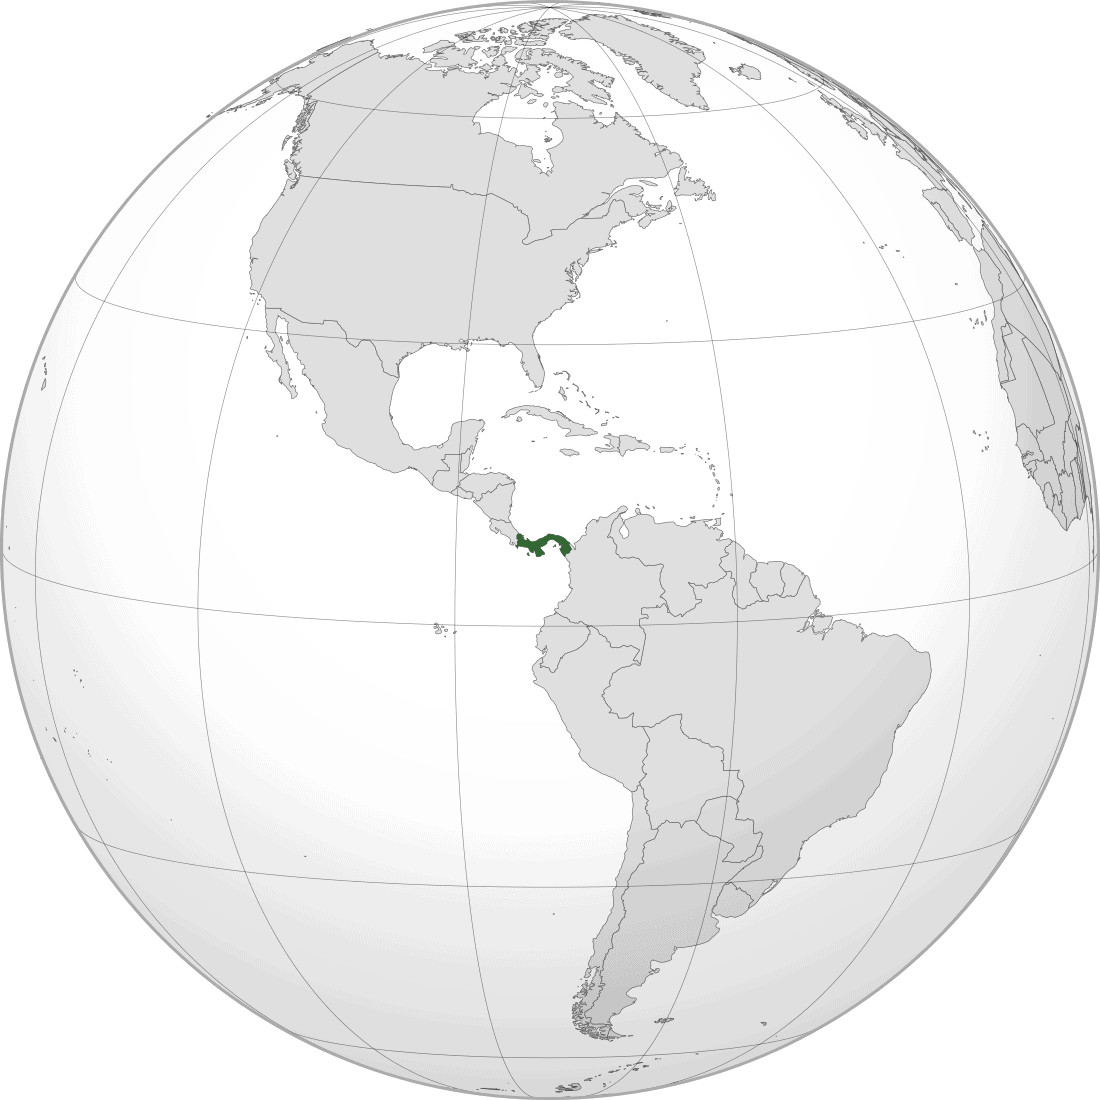 Panama location on the globe